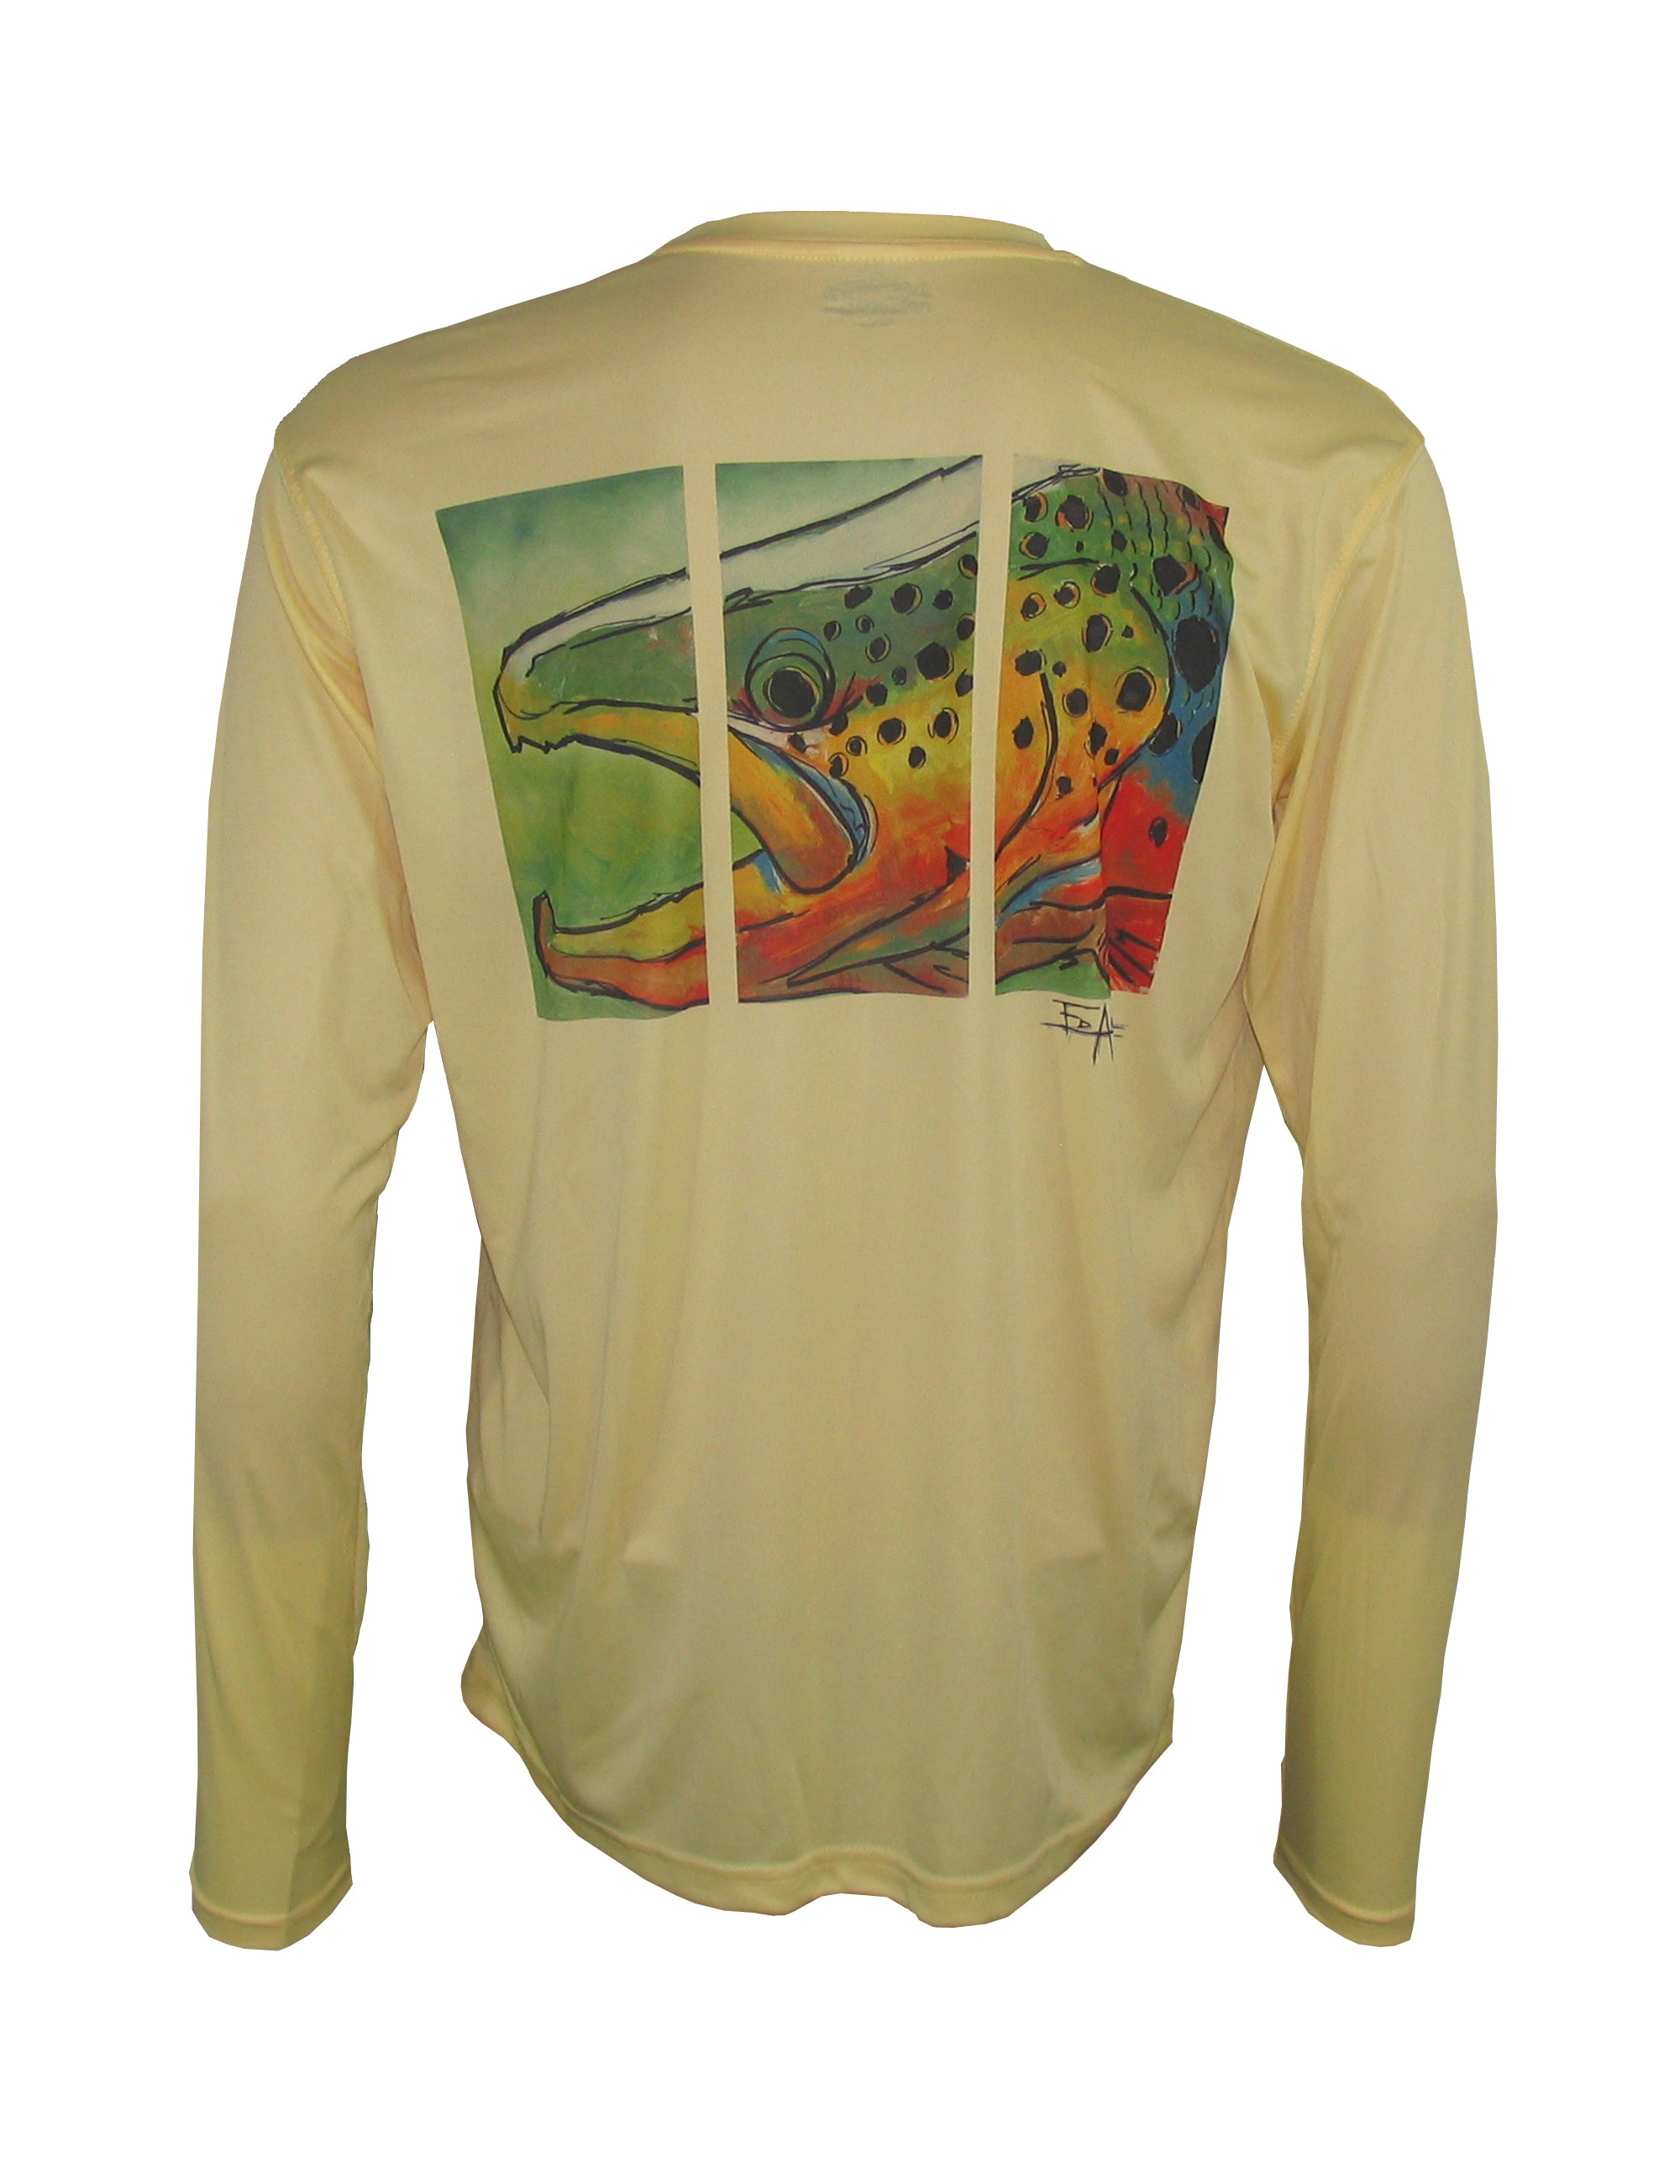 Men's Sun Protective Fishing Shirt Pale Yellow/Brown Trout